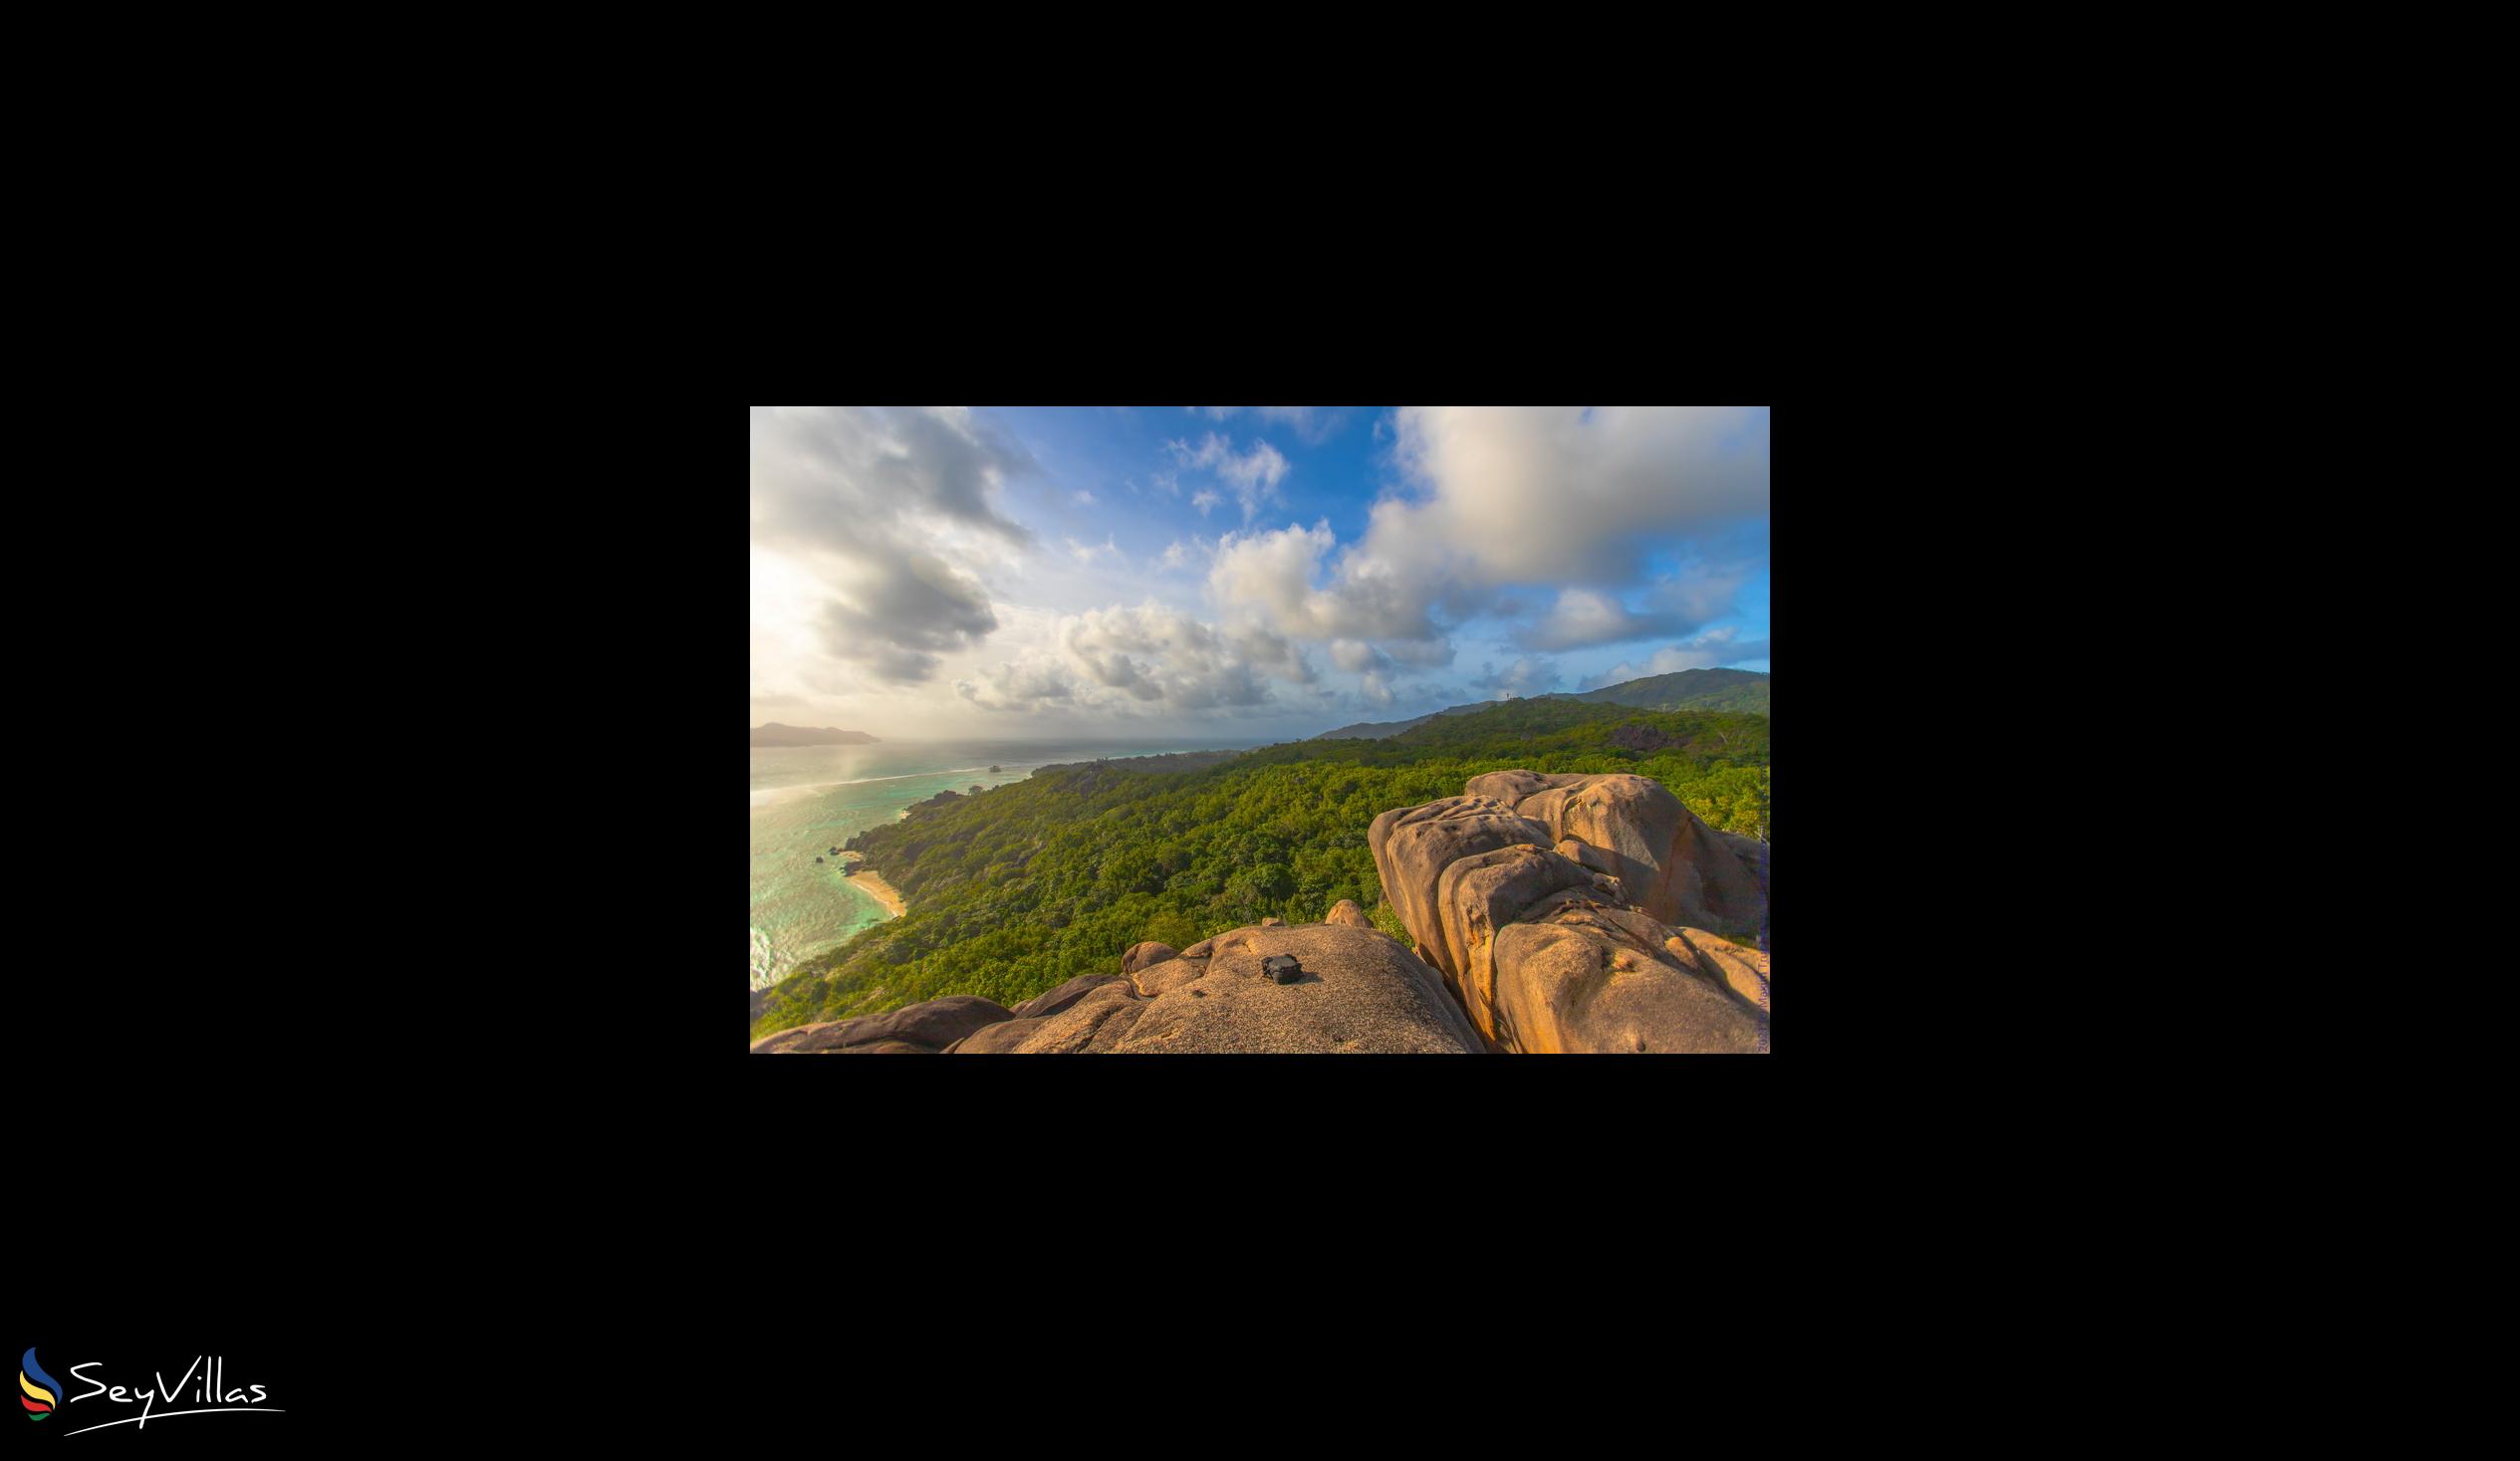 Photo 36: Ambiance Villa - Location - La Digue (Seychelles)